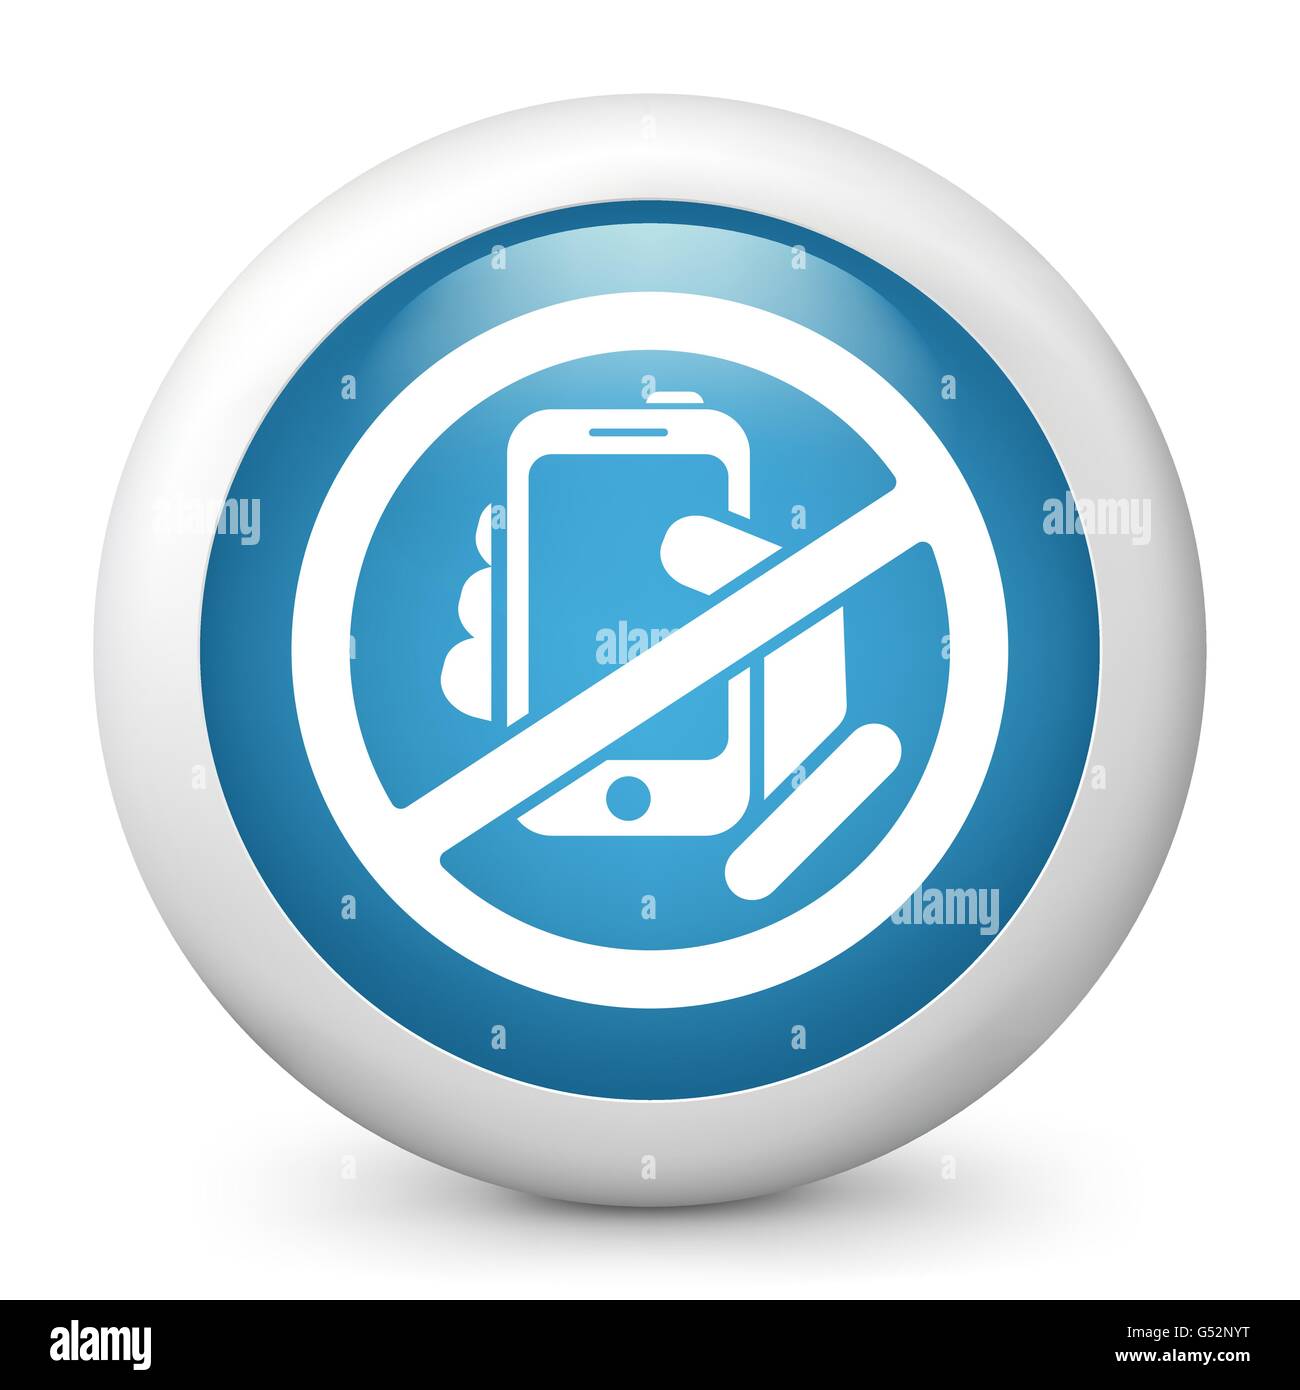 Vecteur Stock Kein Handy erlaubt Handyverbot Symbol Flat Design Icon